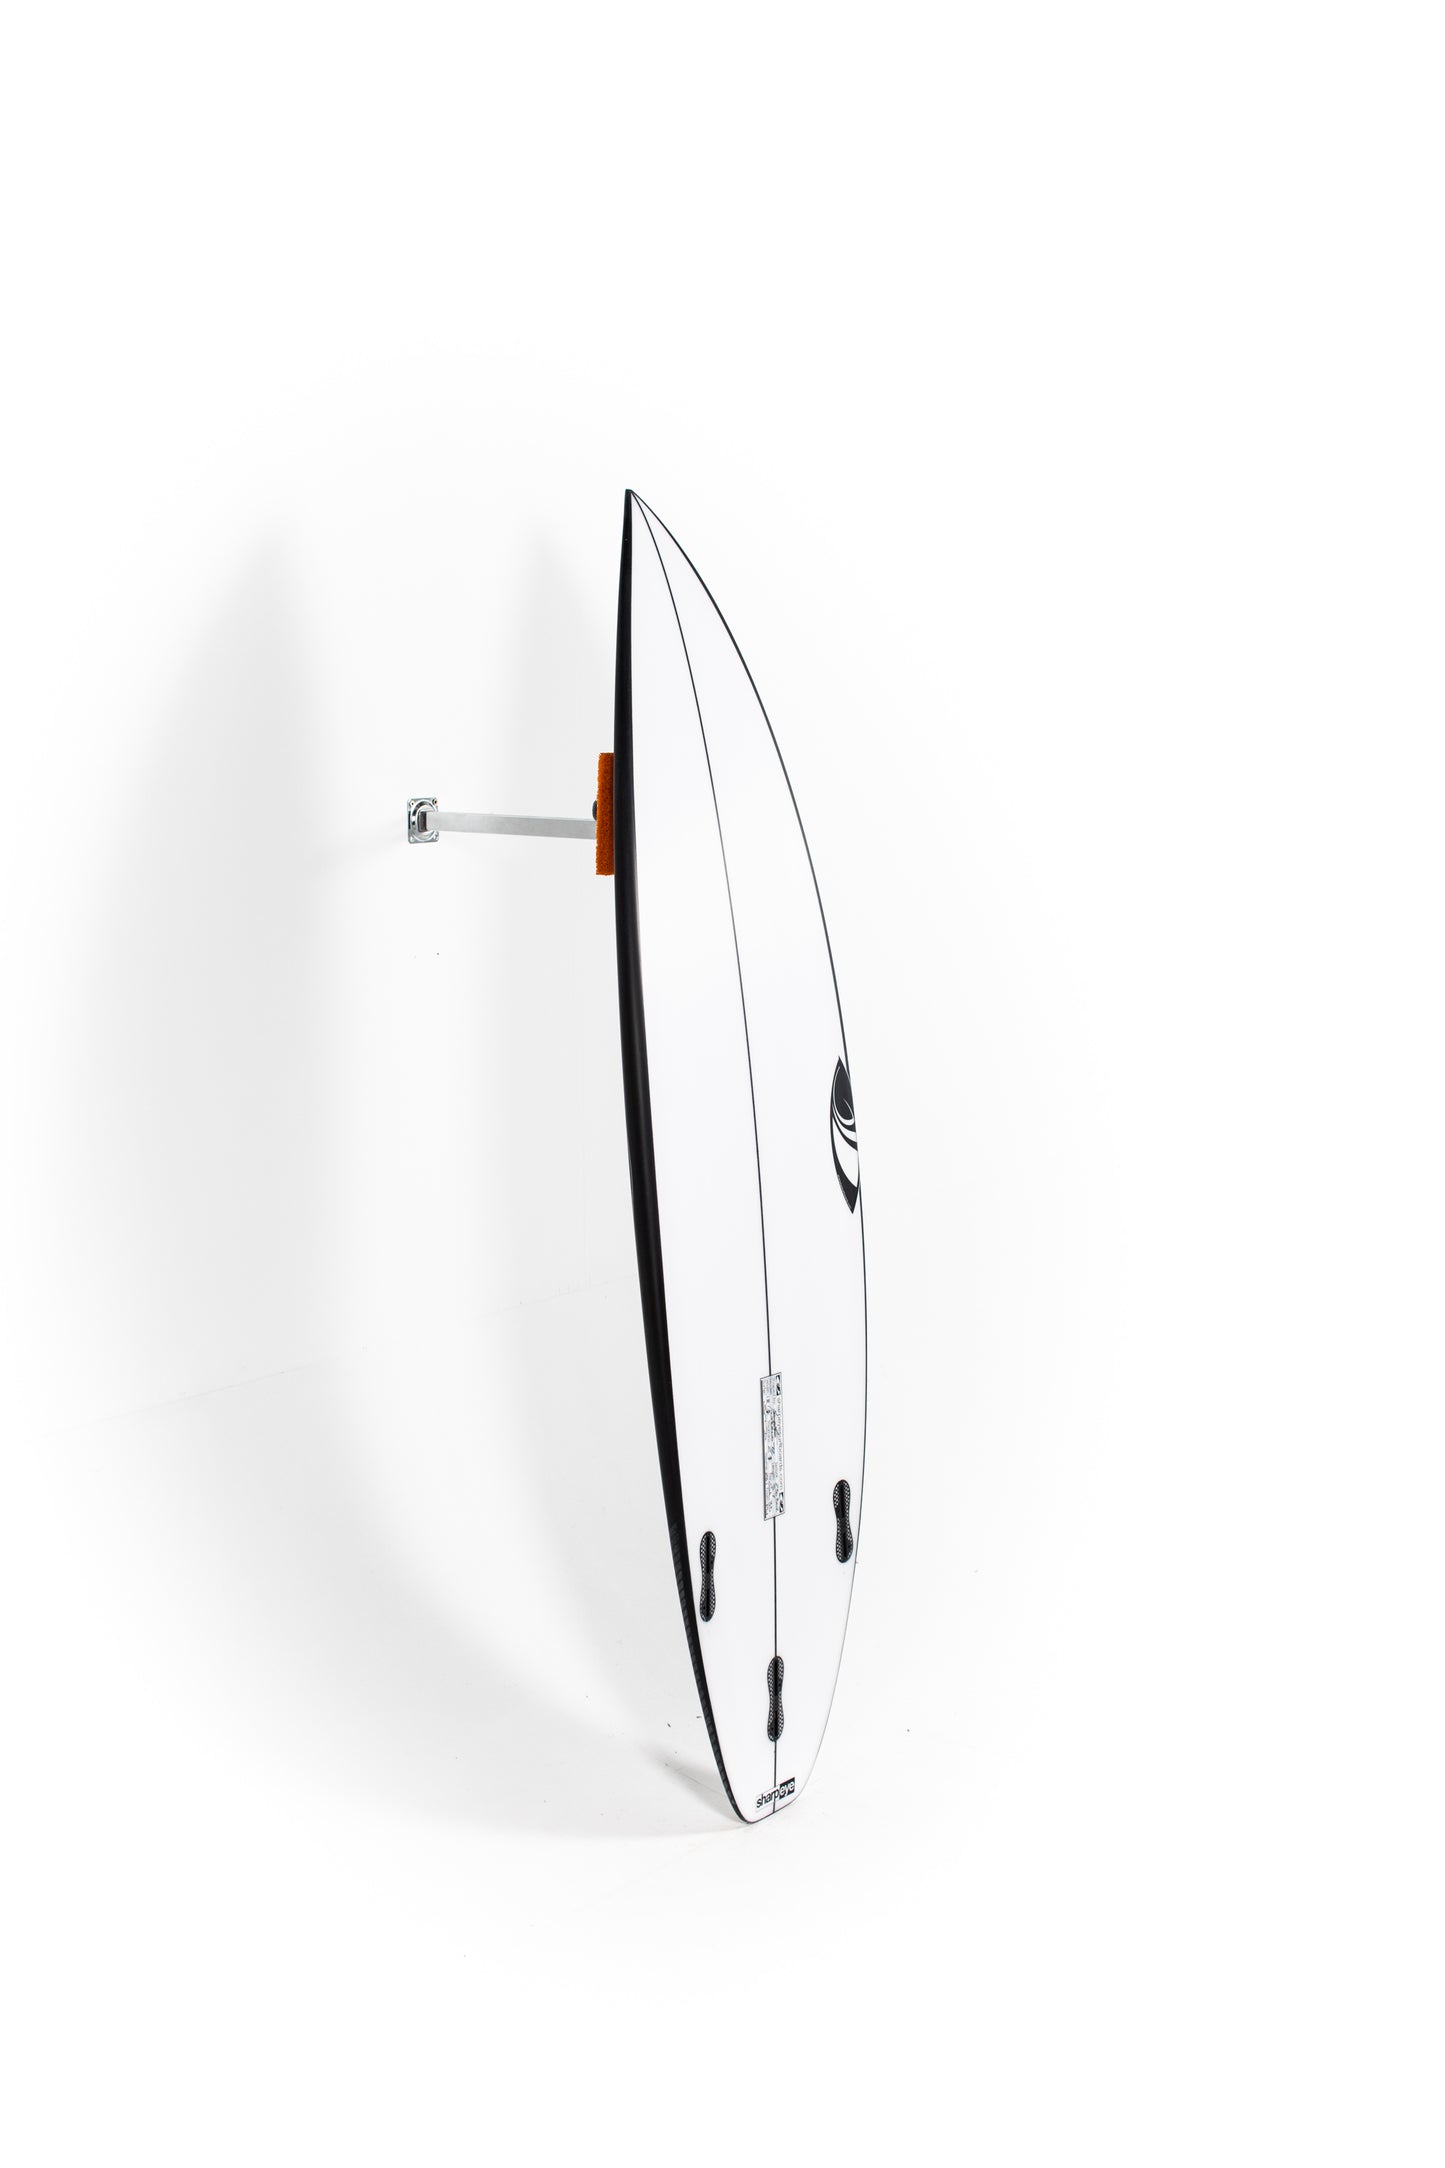 Sharp Eye Surfboards - INFERNO 72 PRO by Marcio Zouvi 5'8